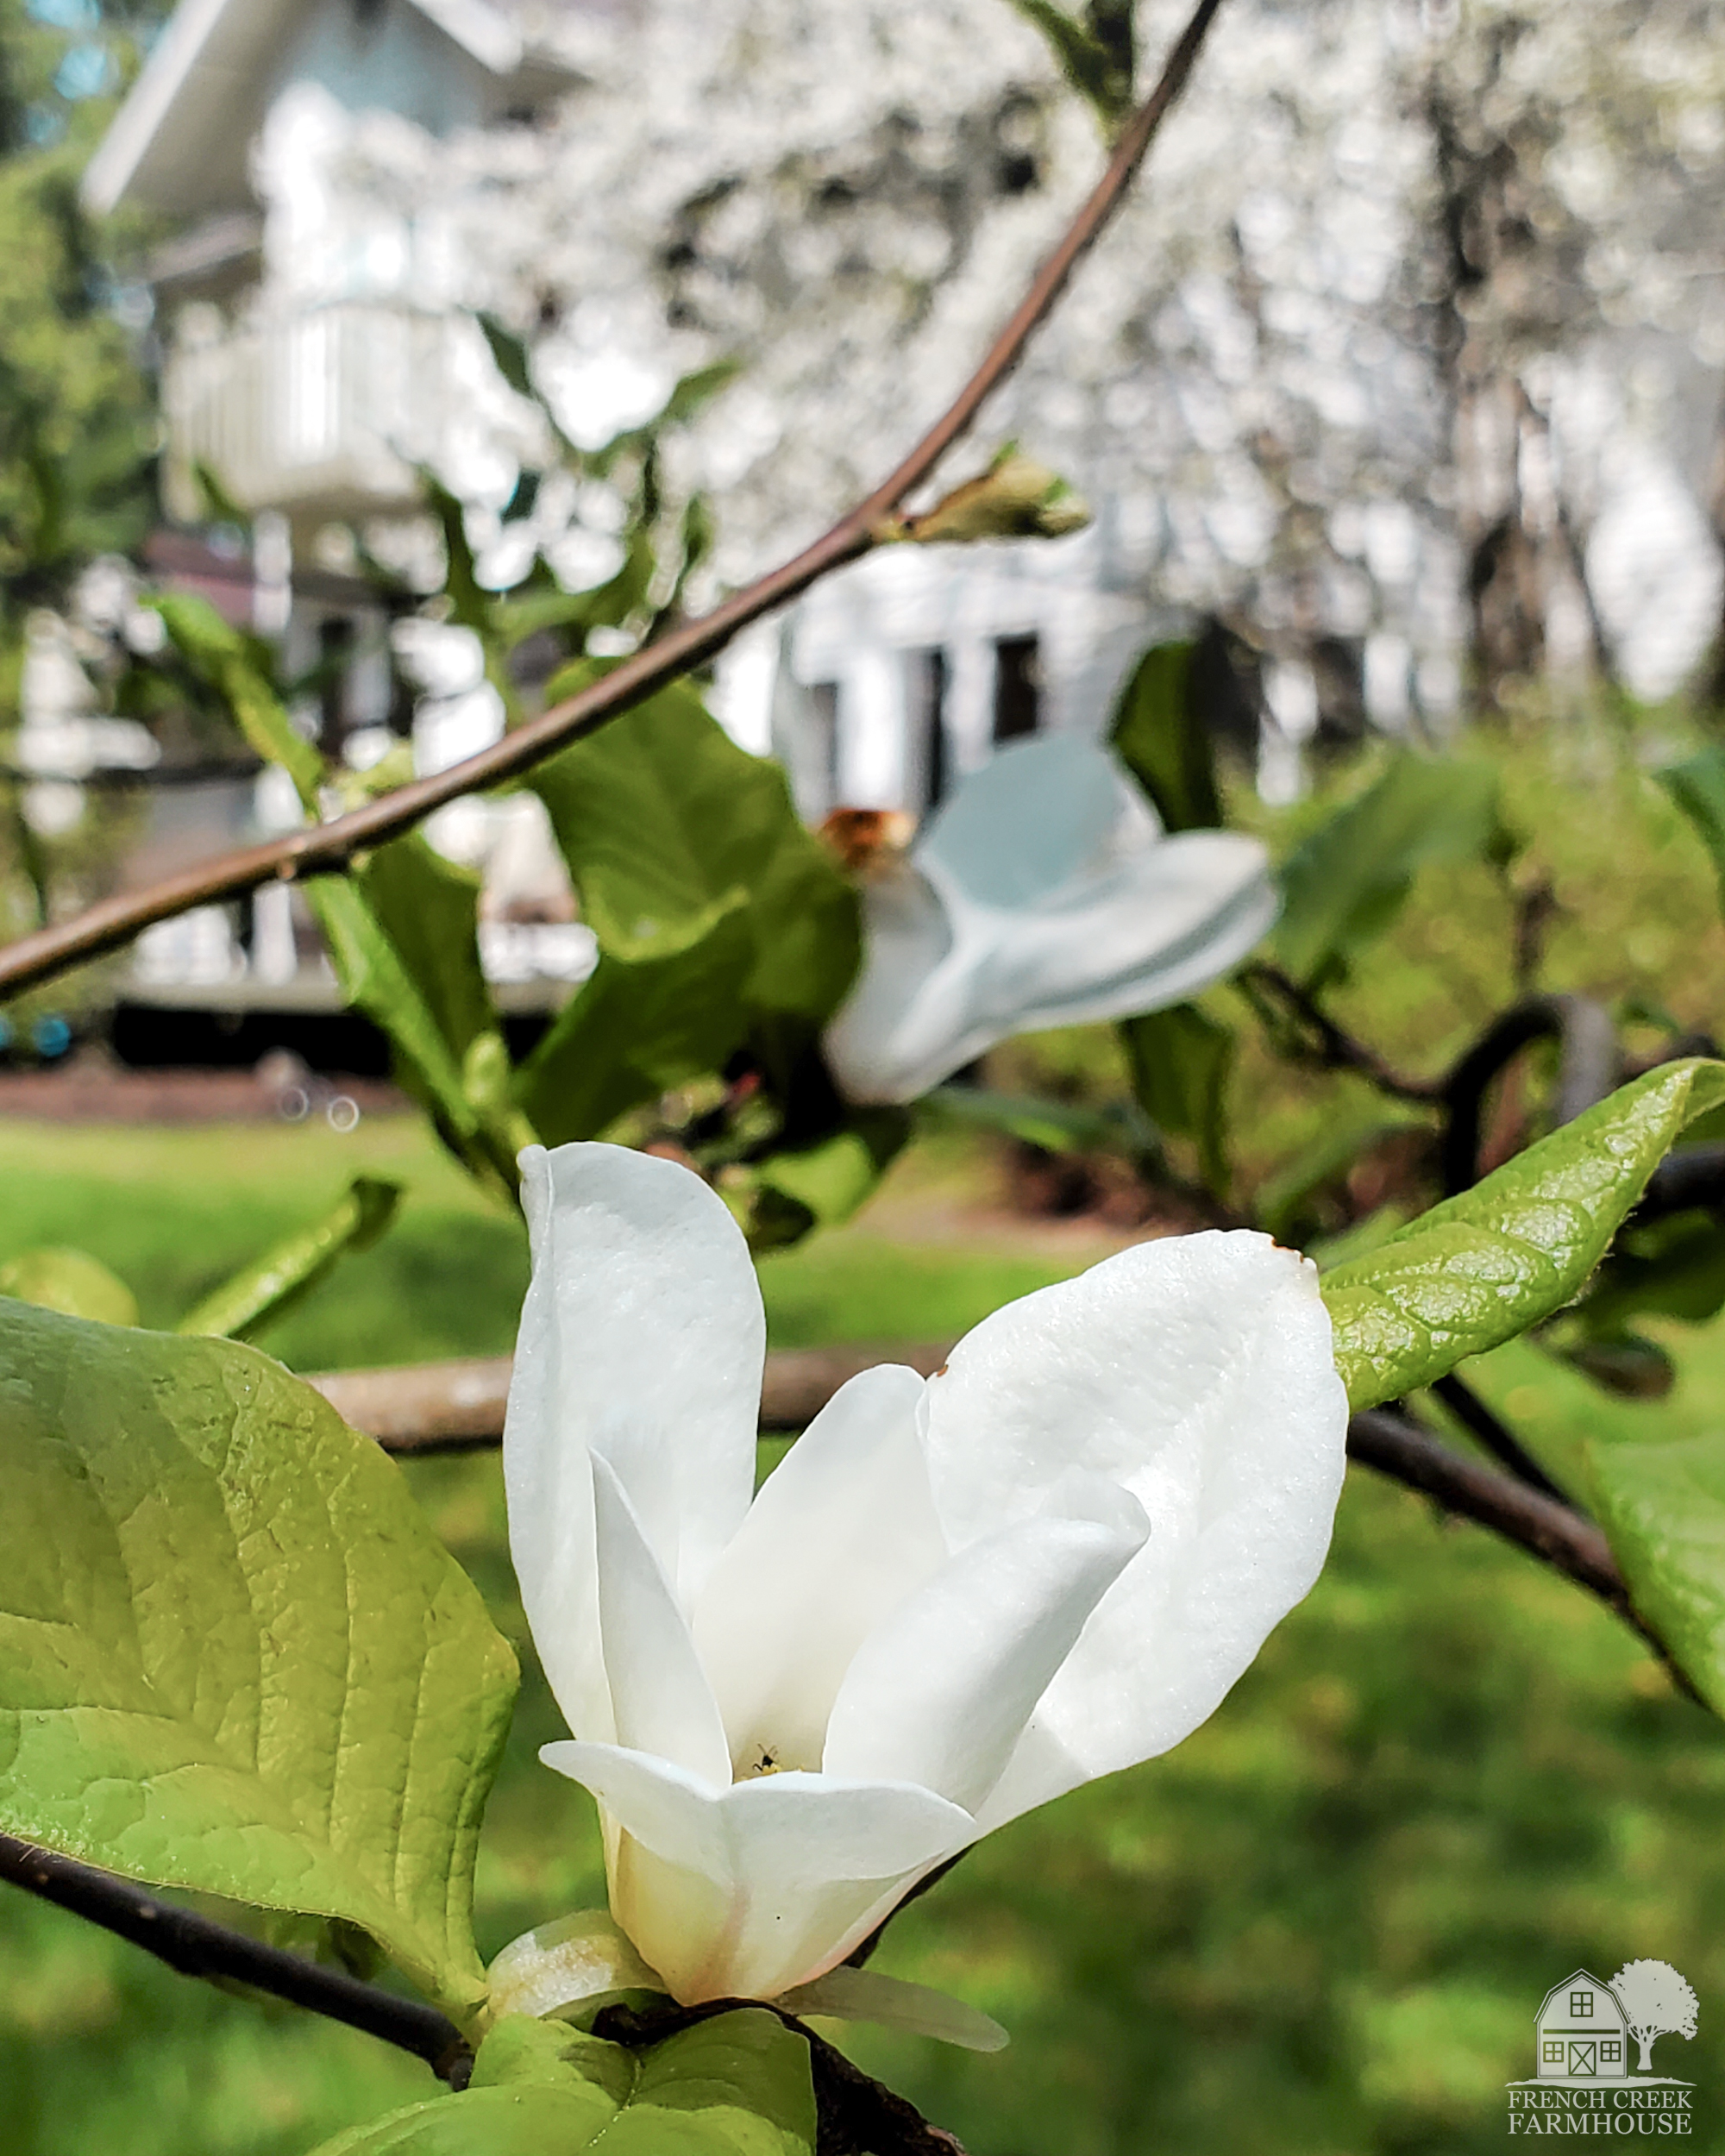 Nothing says farmhouse like a magnolia tree in springtime